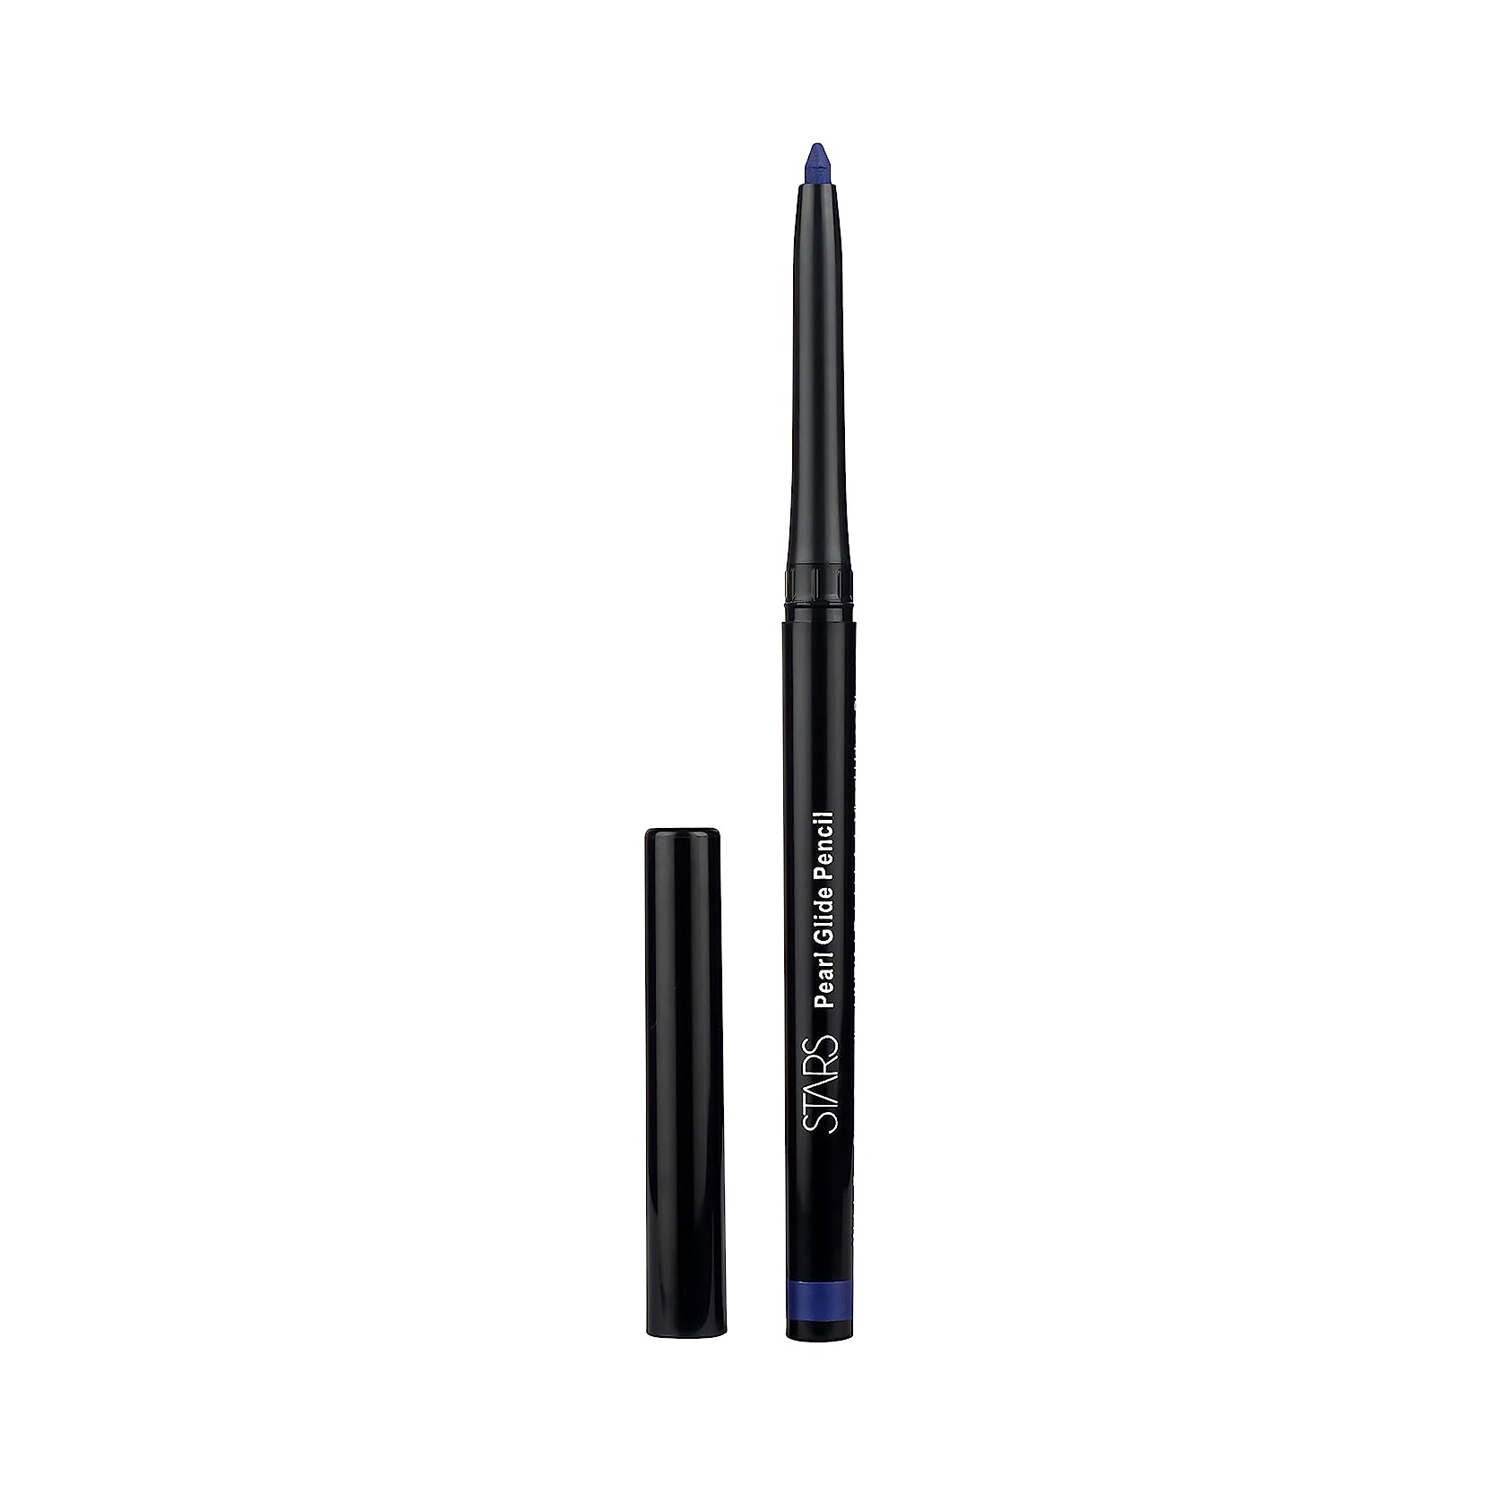 Stars Cosmetics Pearl Glide Eye Pencil - 02 Midnight Blue (30g)